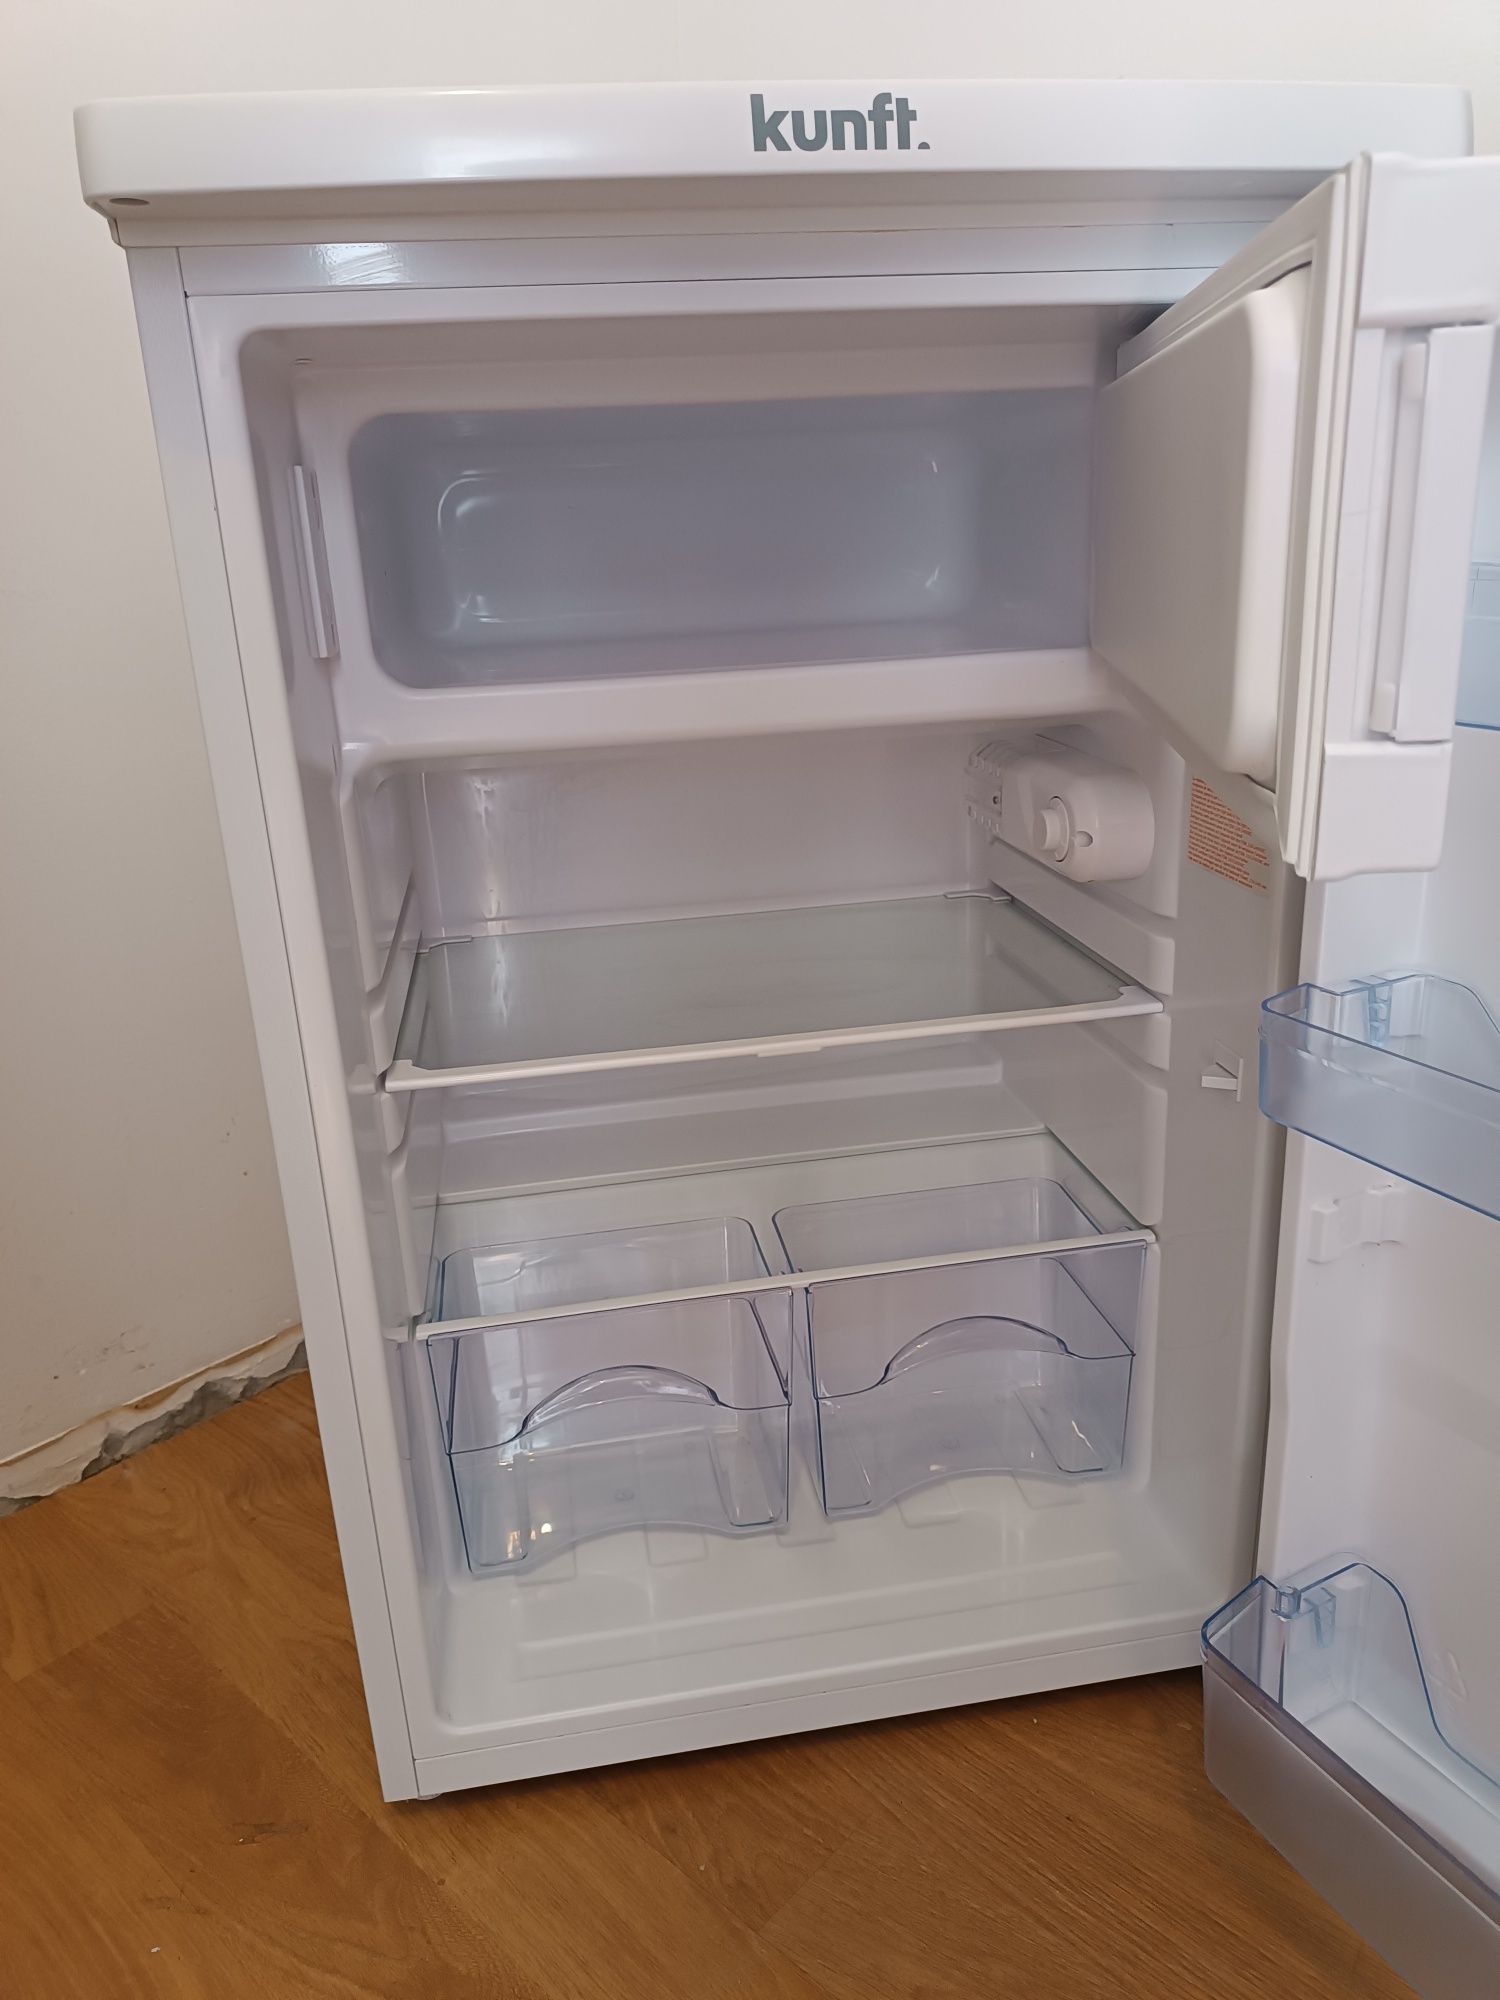 Mini frigorífico kunft